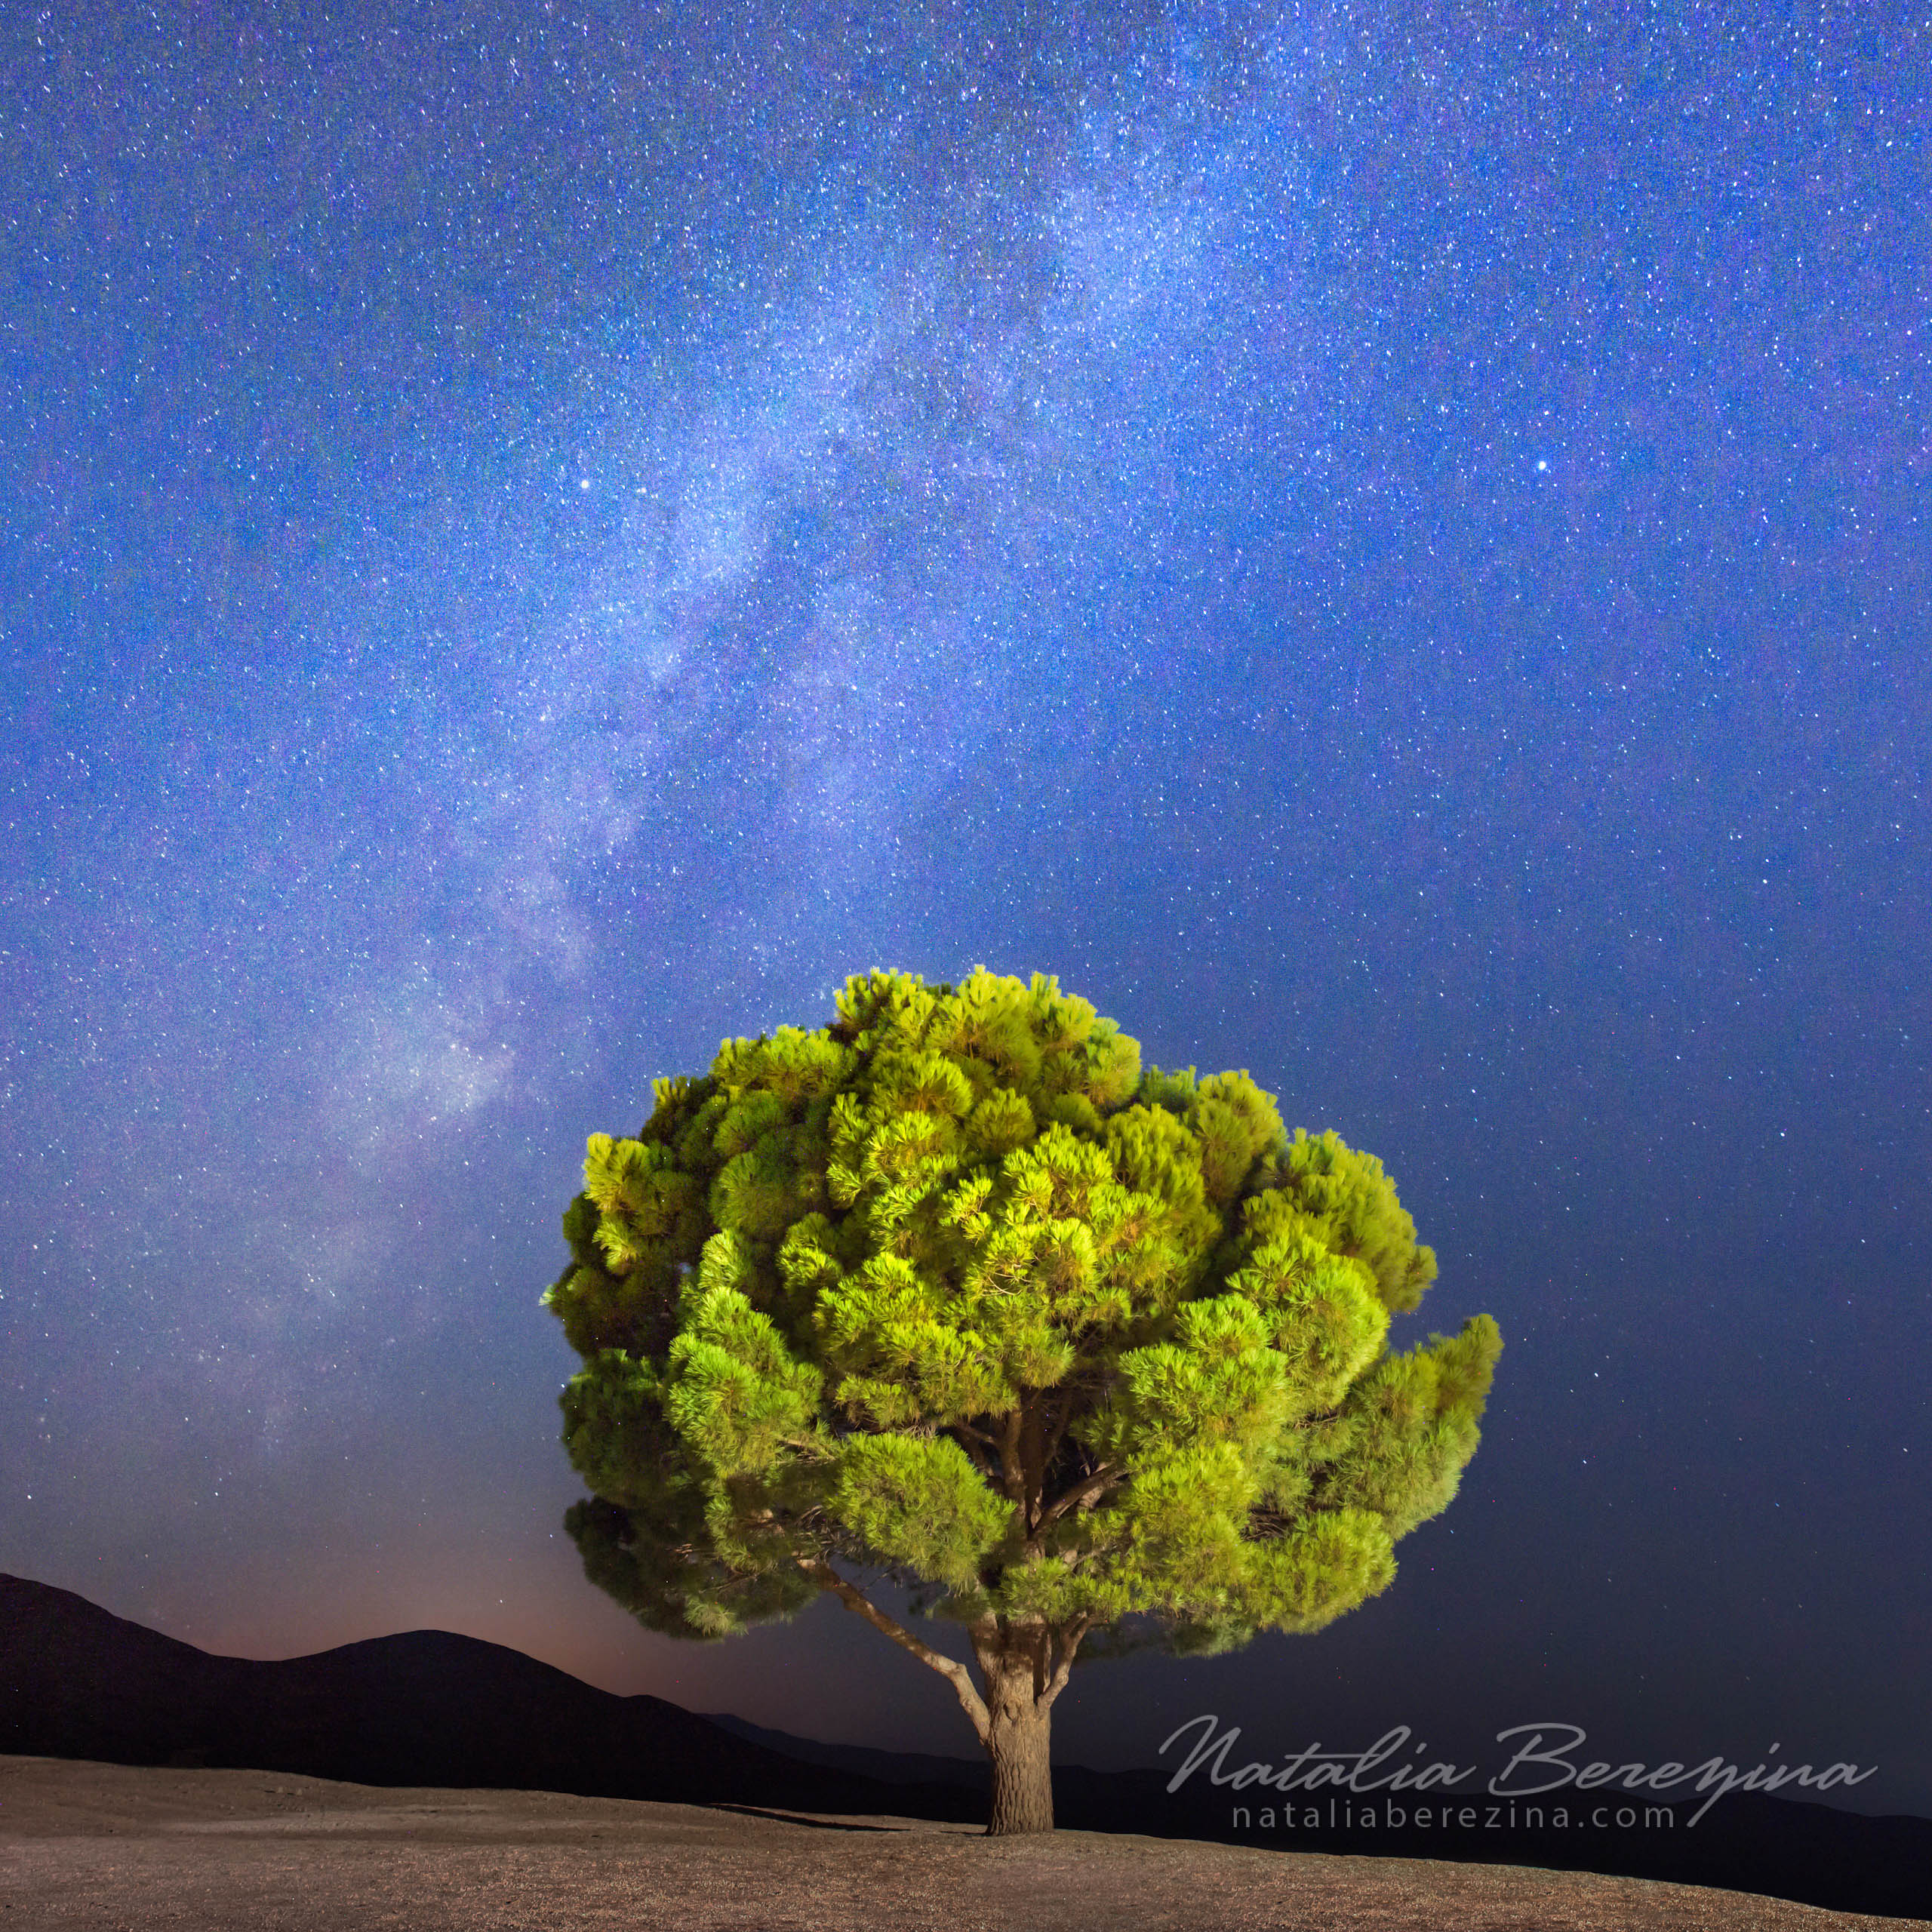 Greece, Crete, night time, star sky, Milky Way, tree, 1x1 CR1-NBDK1U9503 - Crete, Greece - Natalia Berezina Photography